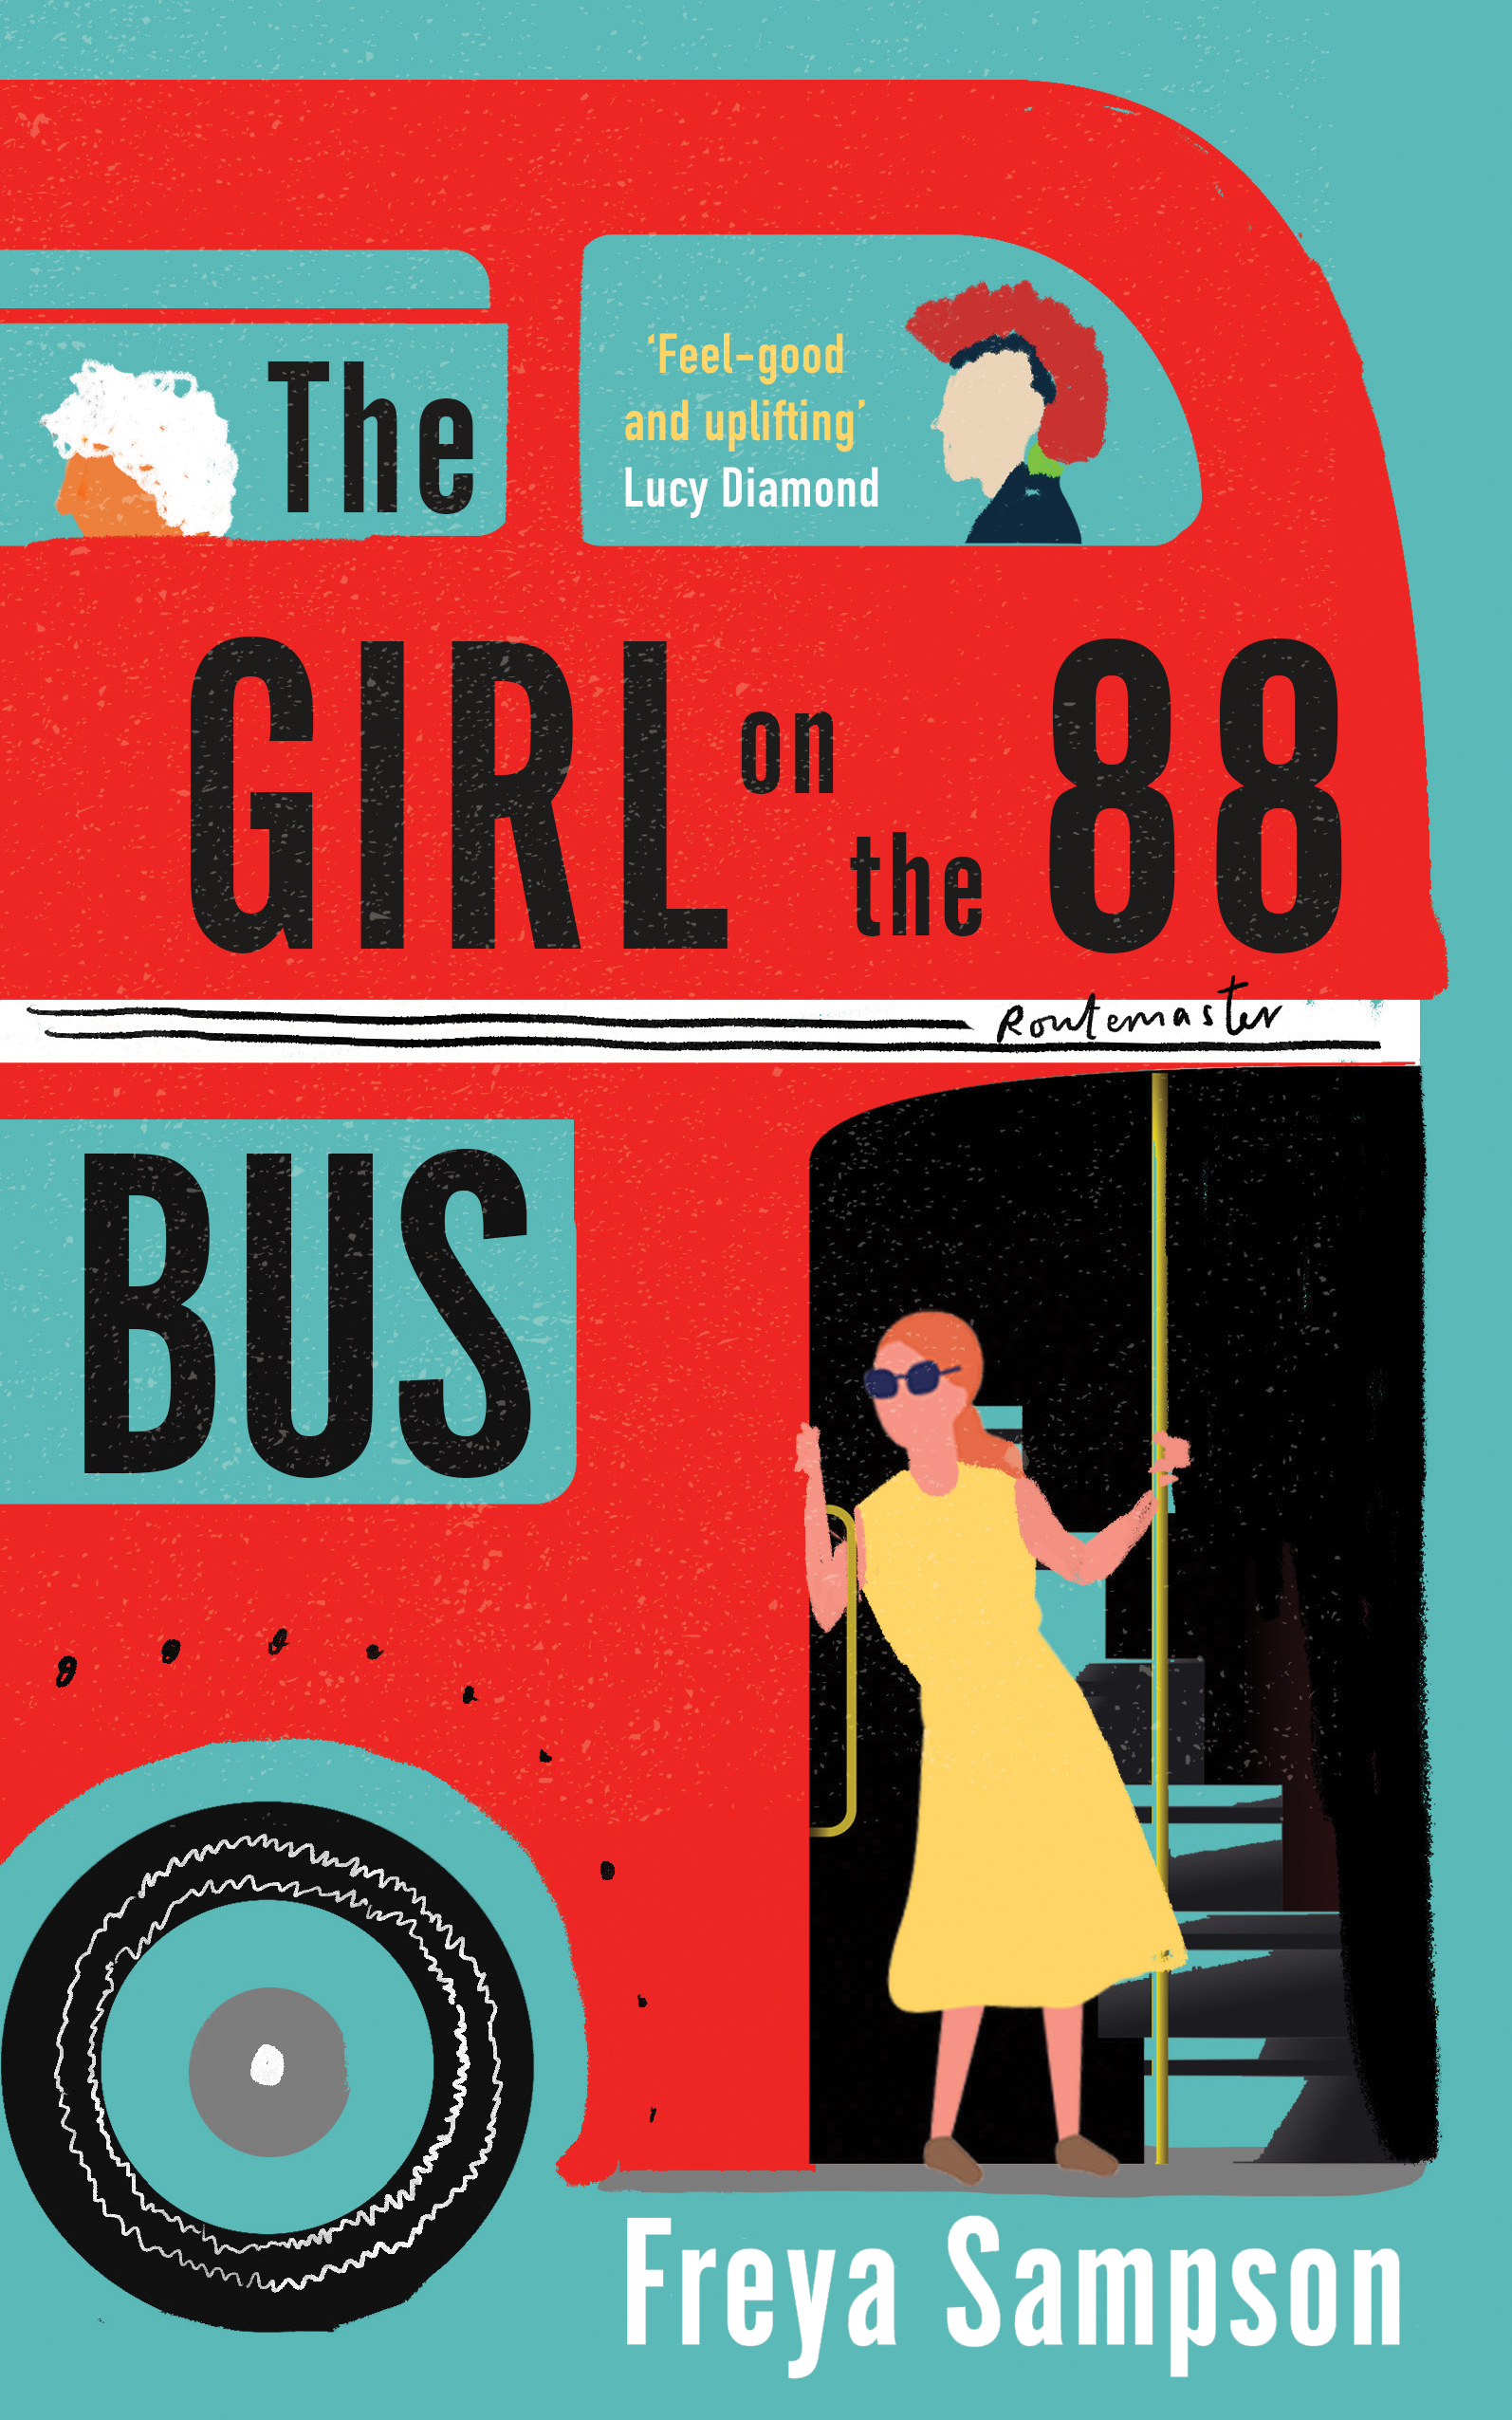 Buy THE GIRL ON THE 88 BUS (UK) thumbnail